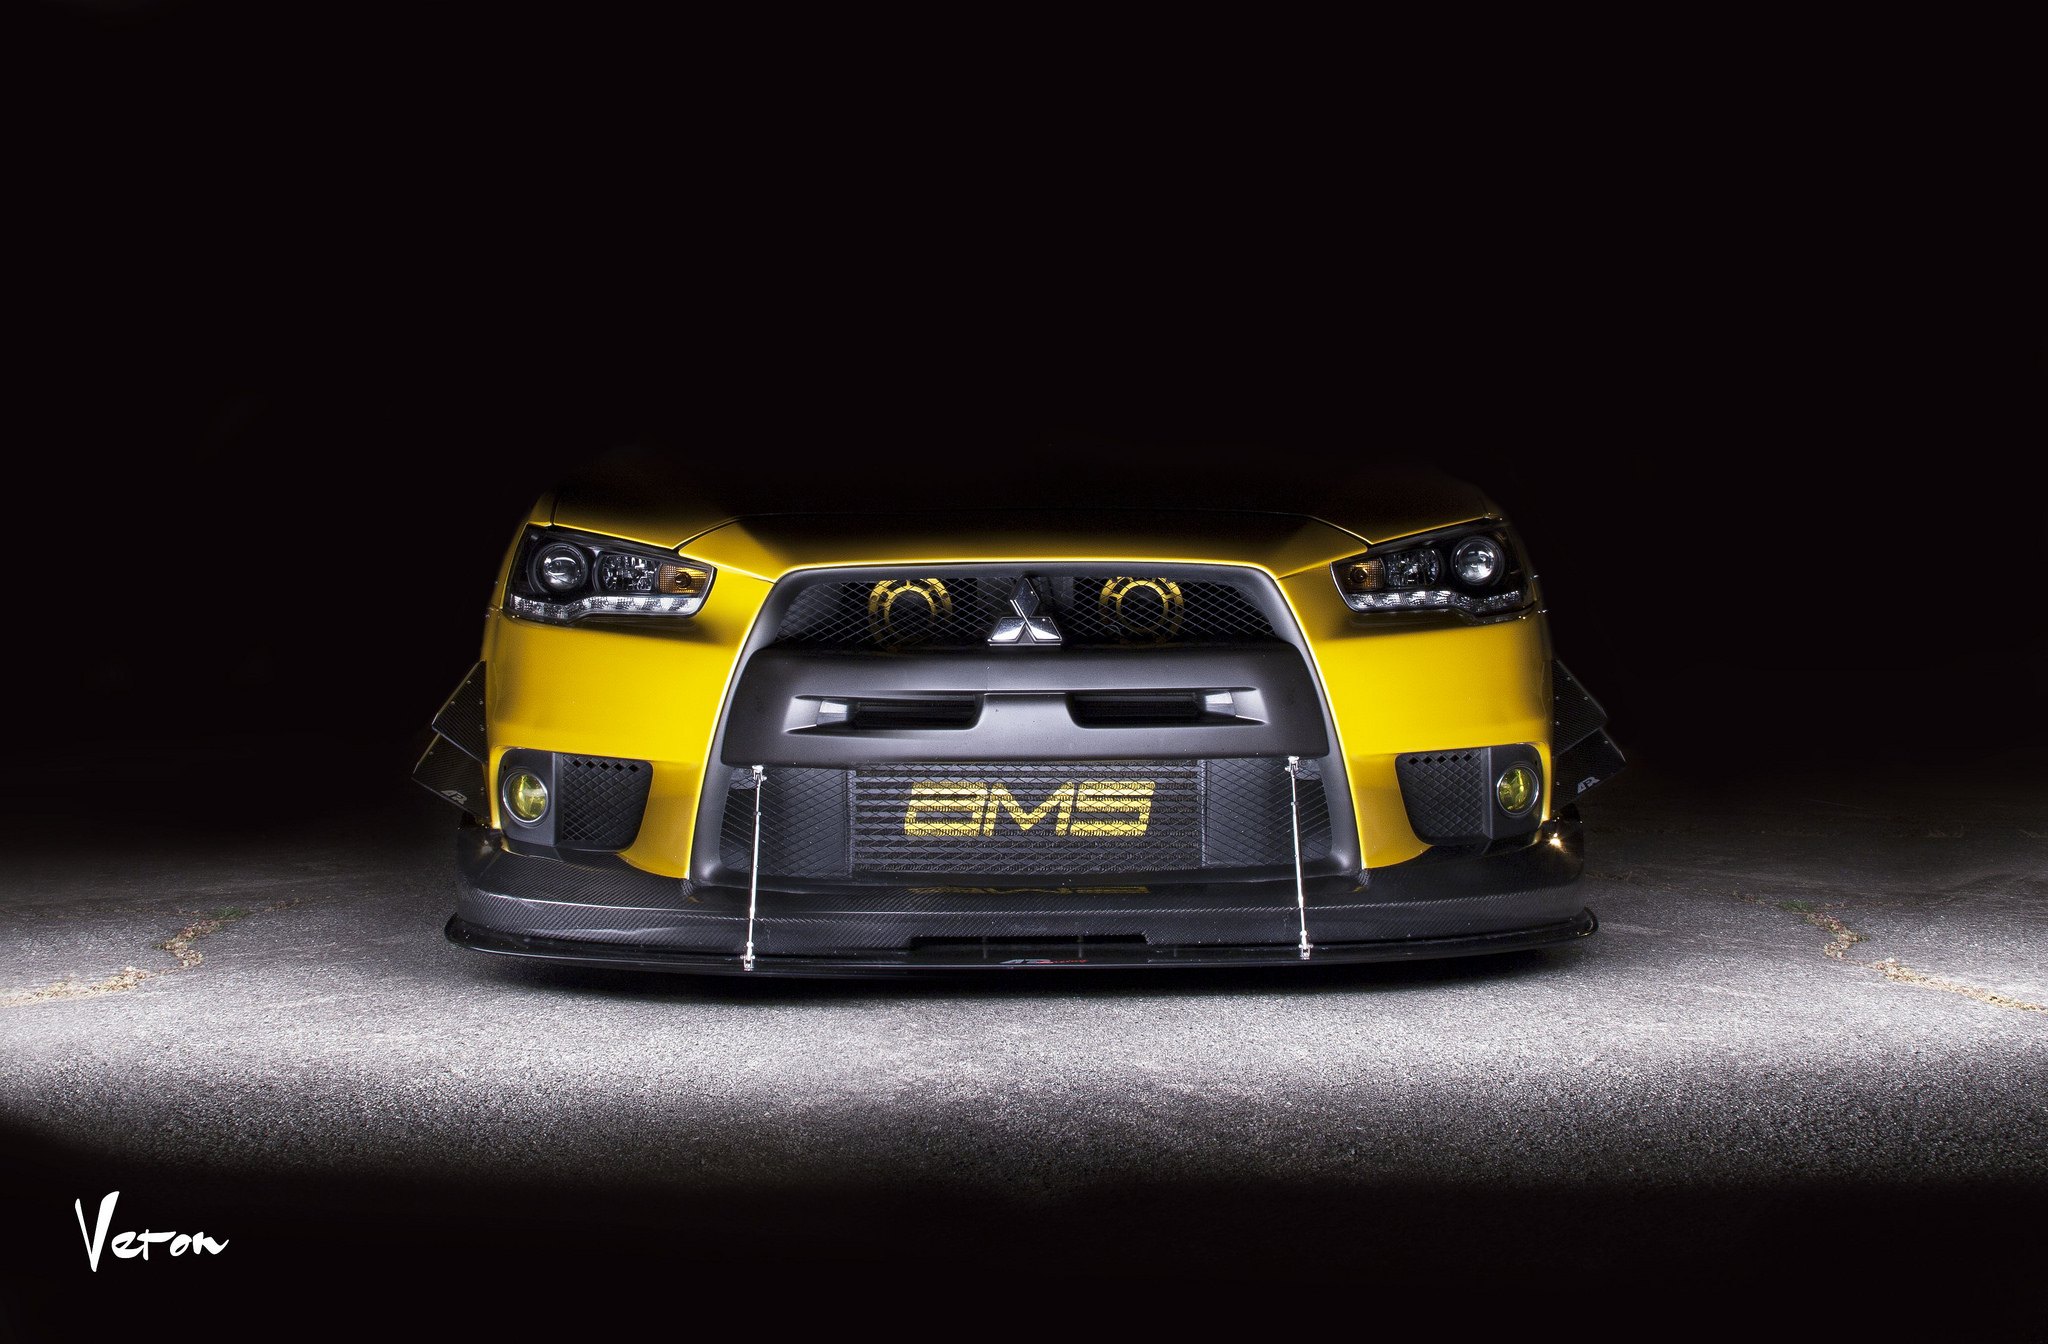 Aftermarket LED Headlights on Yellow Mitsubishi Evolution - Photo by Manuel Veron